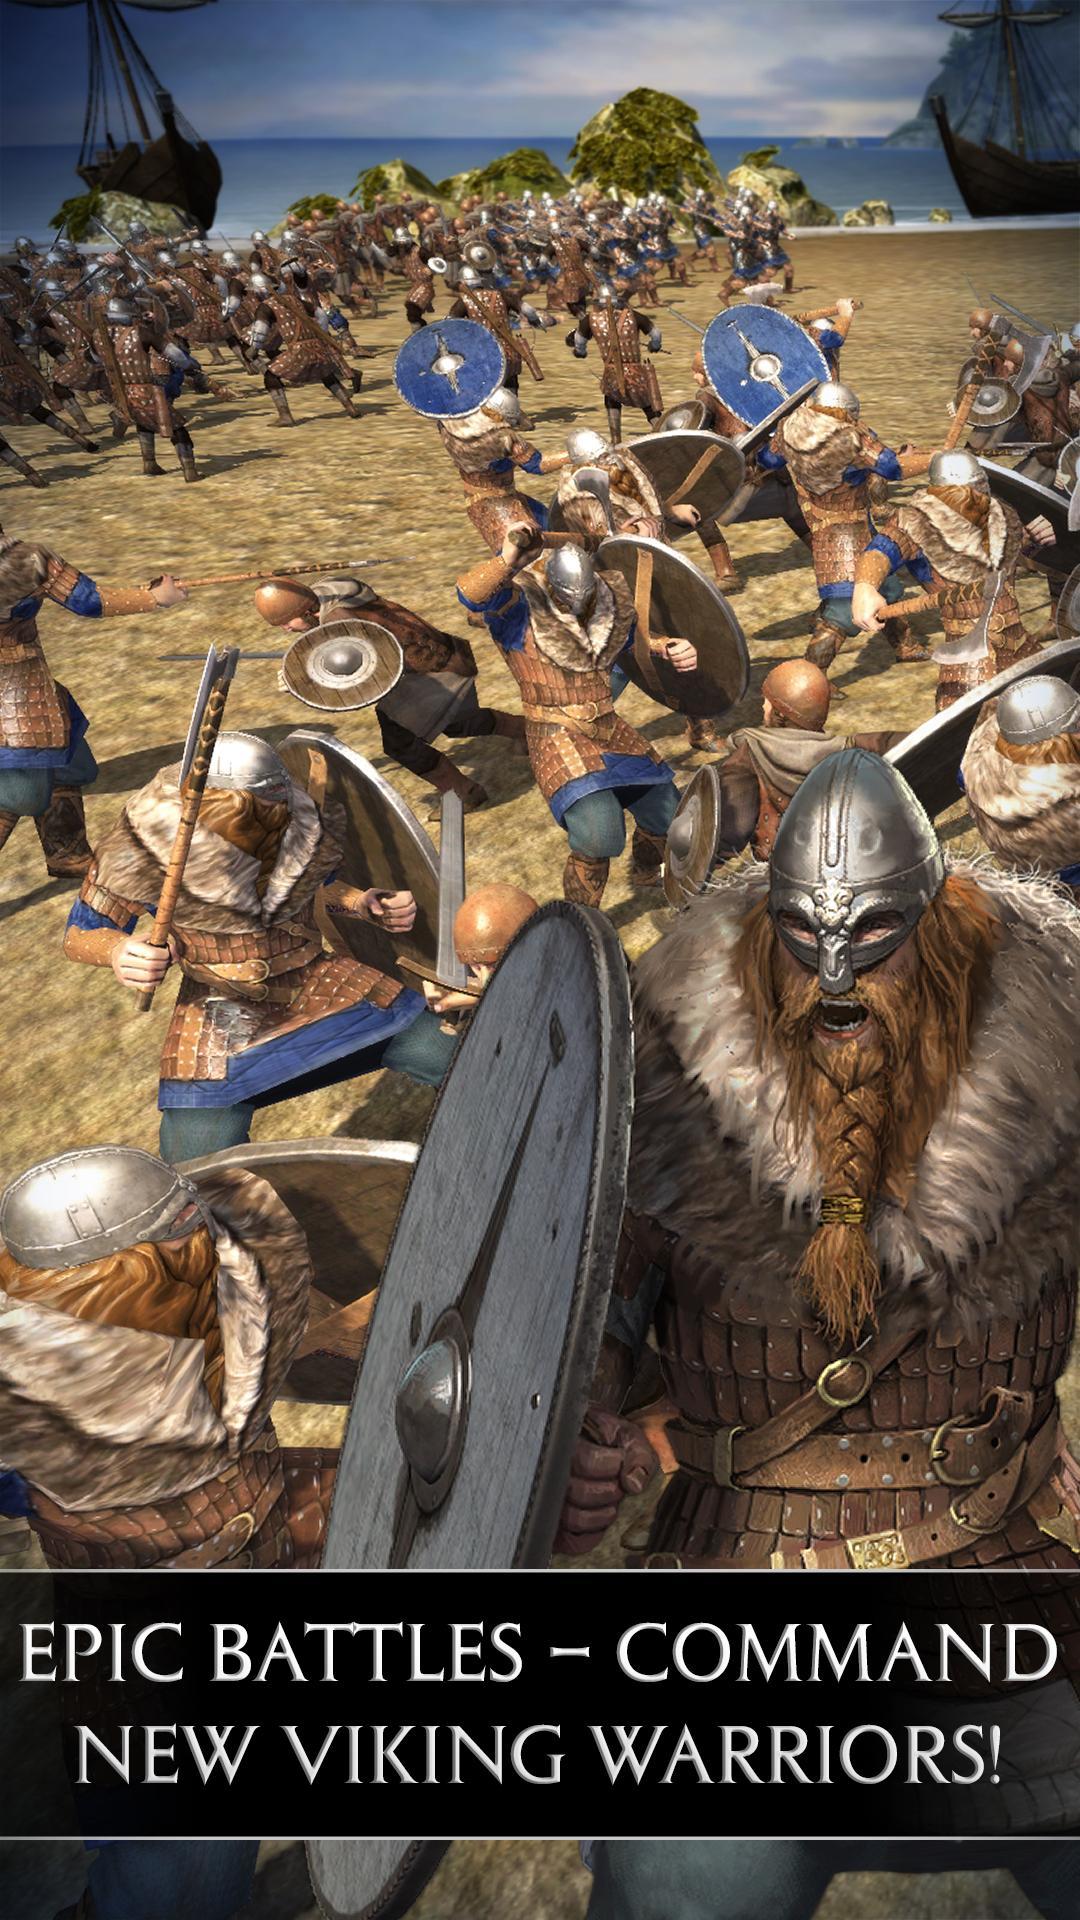 Total War Battles: KINGDOM - Strategy RPG 1.30 Screenshot 1